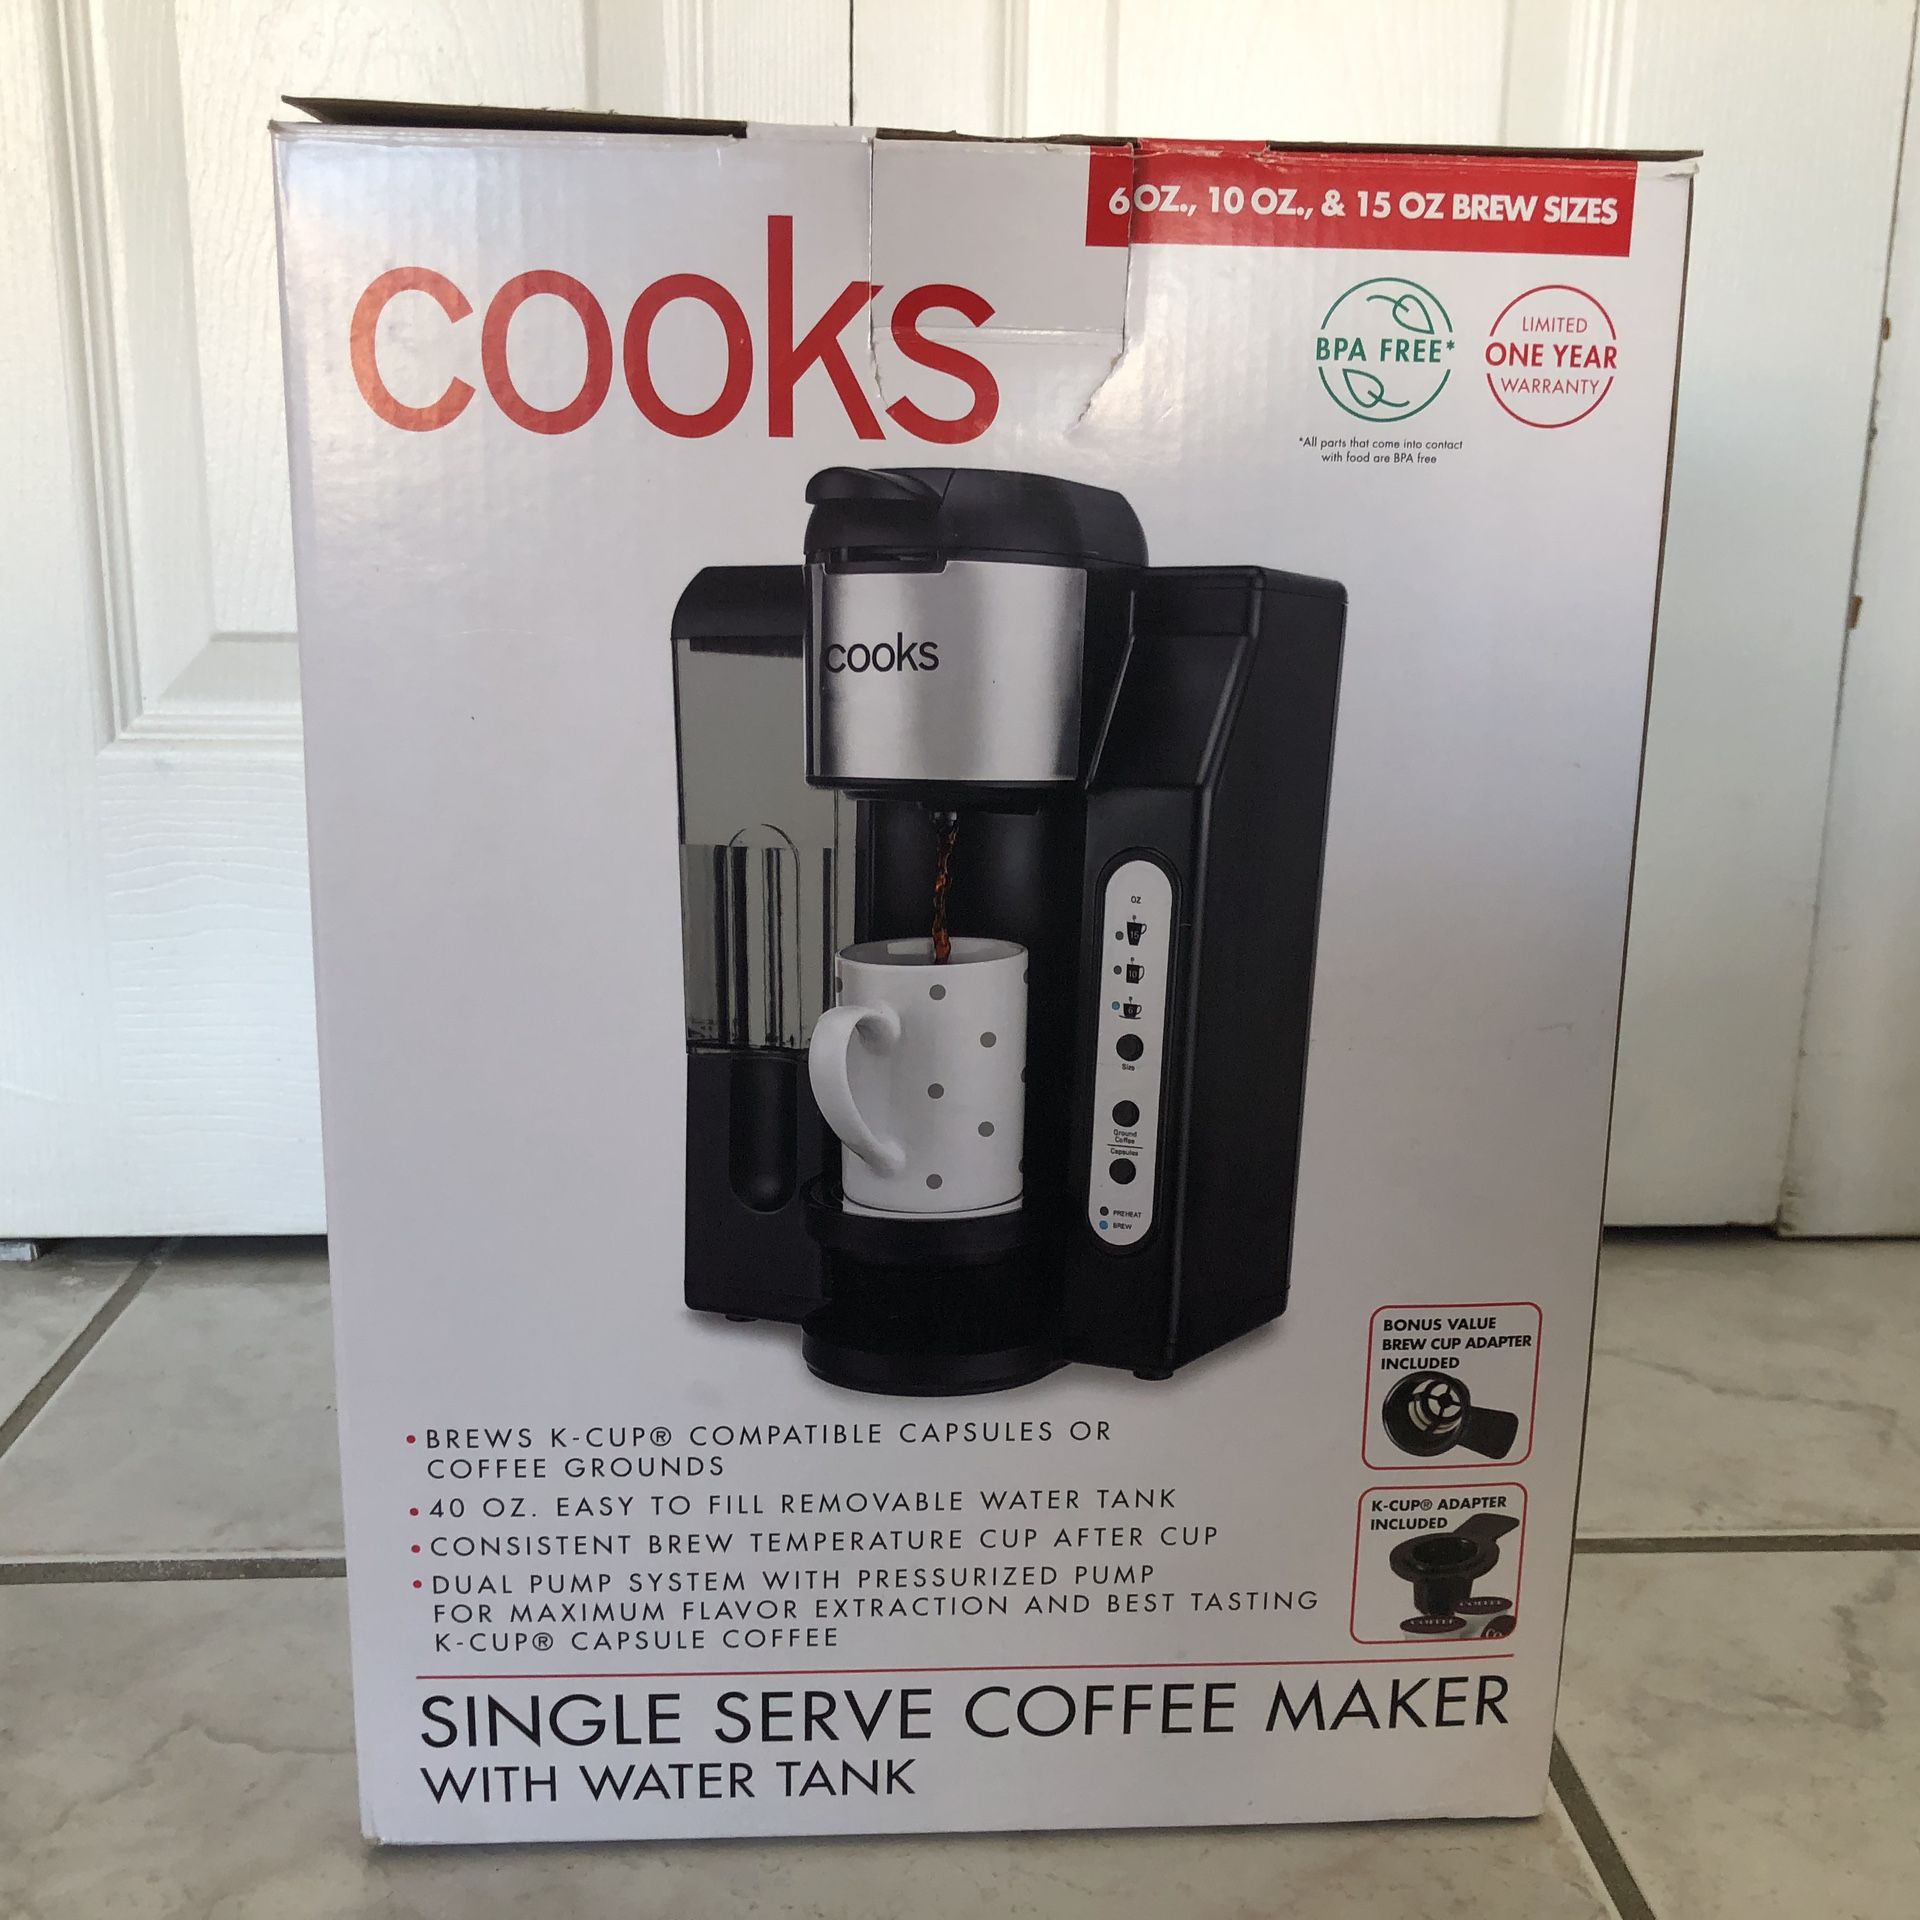 Cooks single serve coffee maker